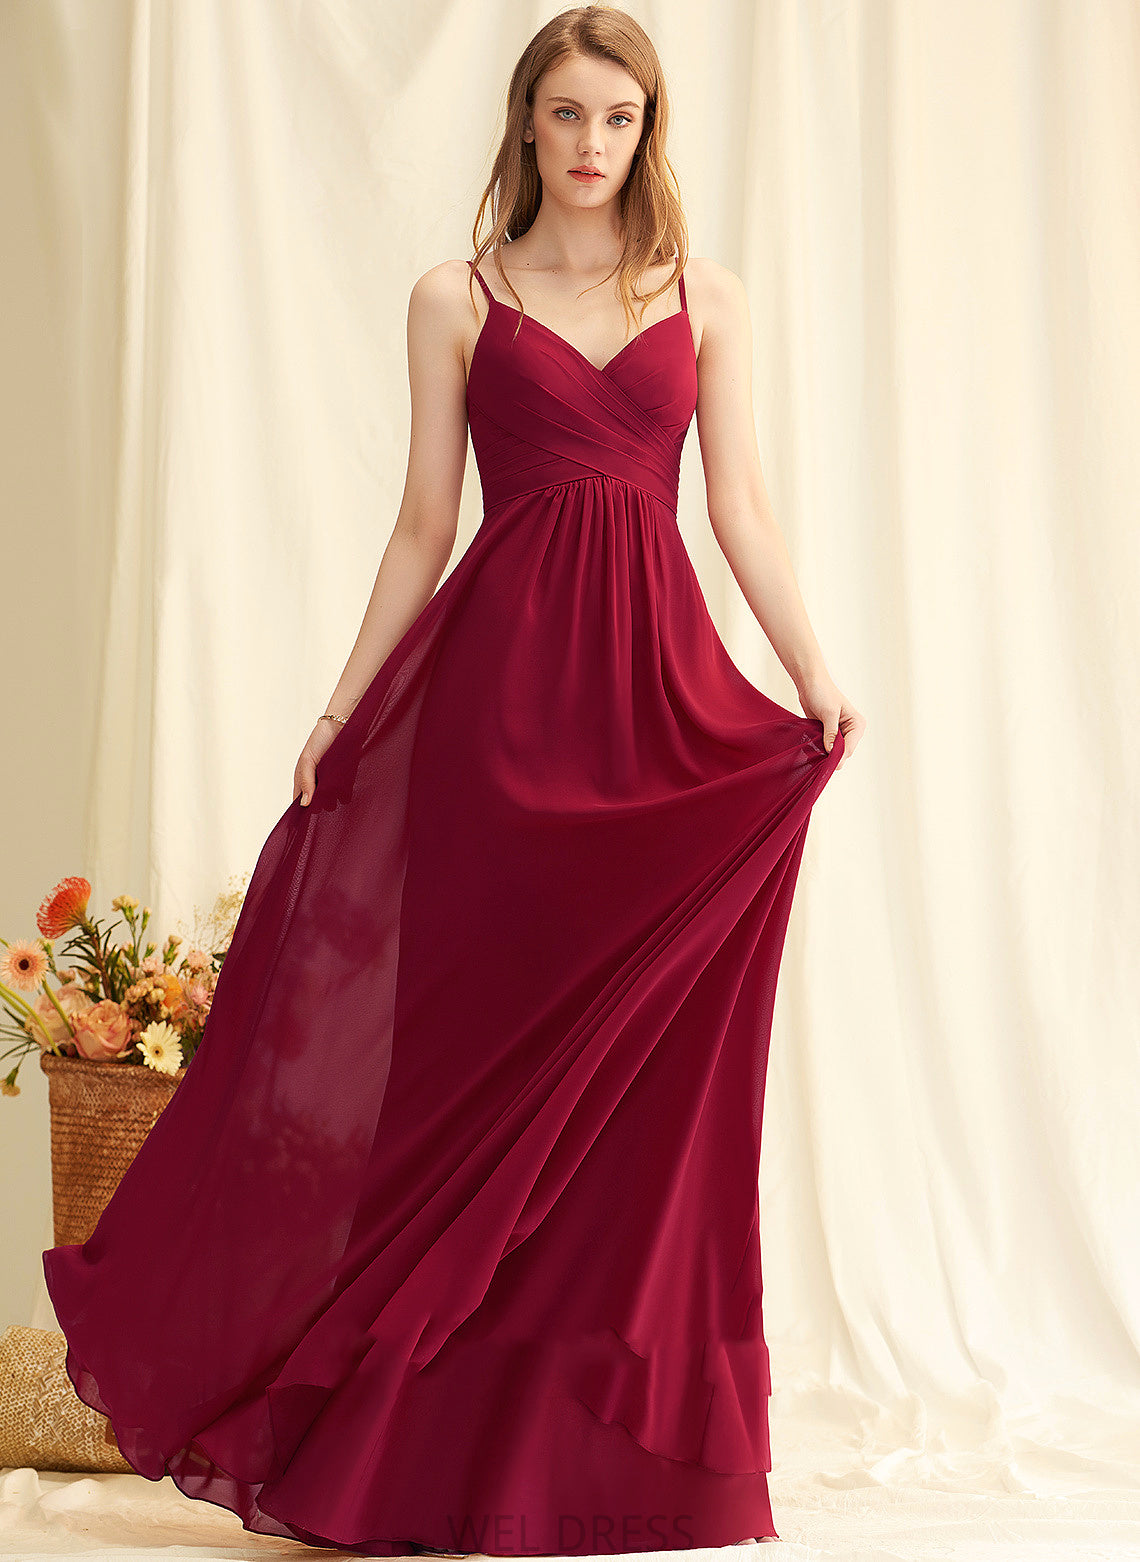 V-neck Neckline A-Line Fabric Silhouette Floor-Length Length Embellishment Ruffle Kallie Sleeveless Natural Waist Bridesmaid Dresses